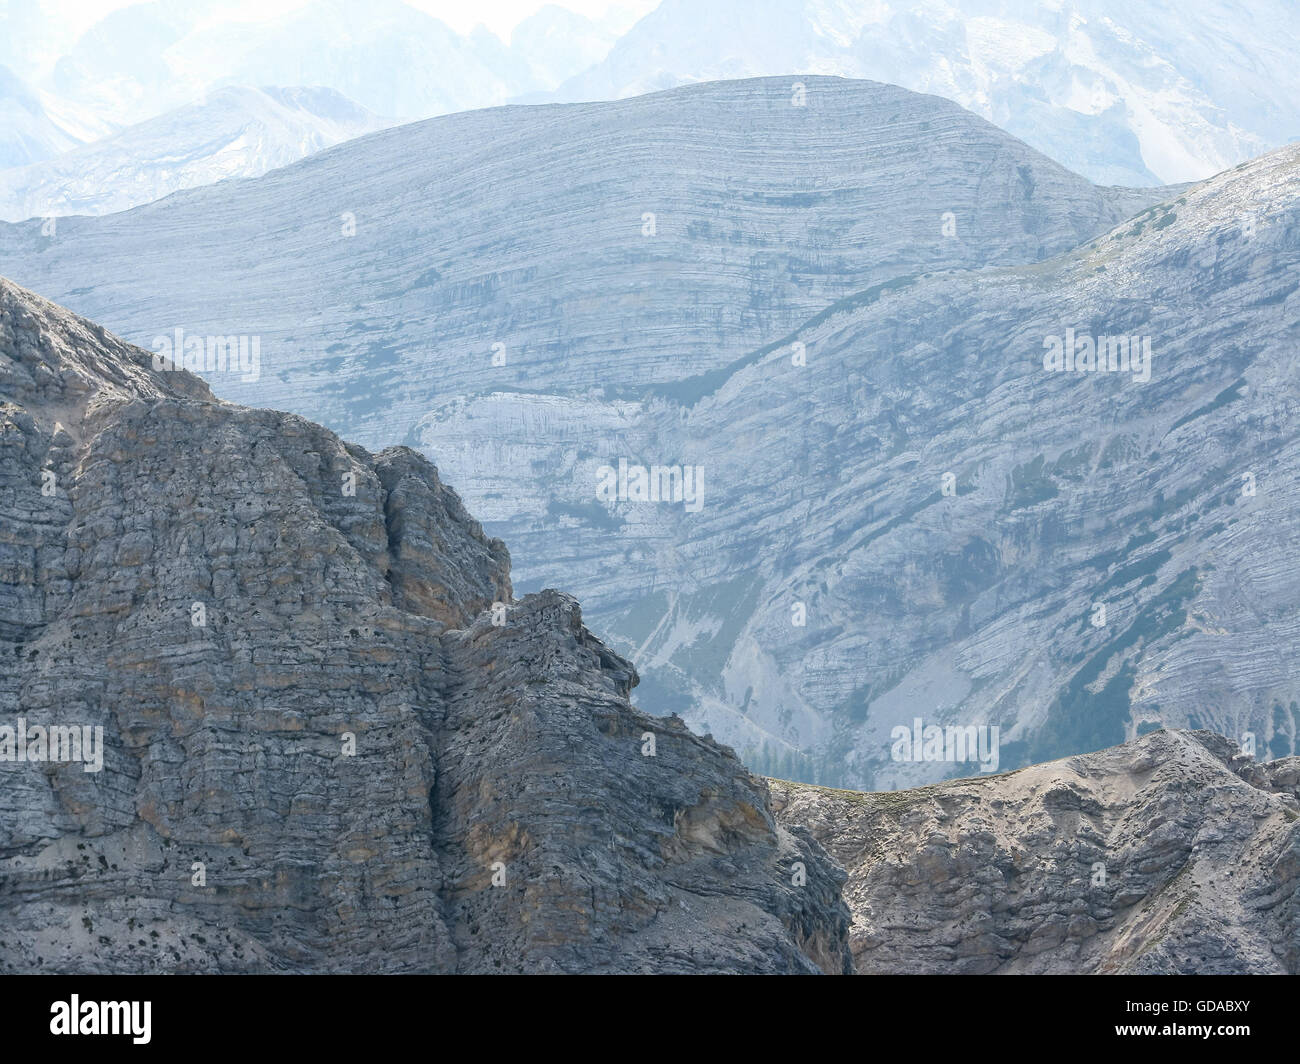 Italy, Trentino-Alto Adige, Provincia di Bolzano, rock faces, view from the summit, mountains with lying rocks in the haze Stock Photo